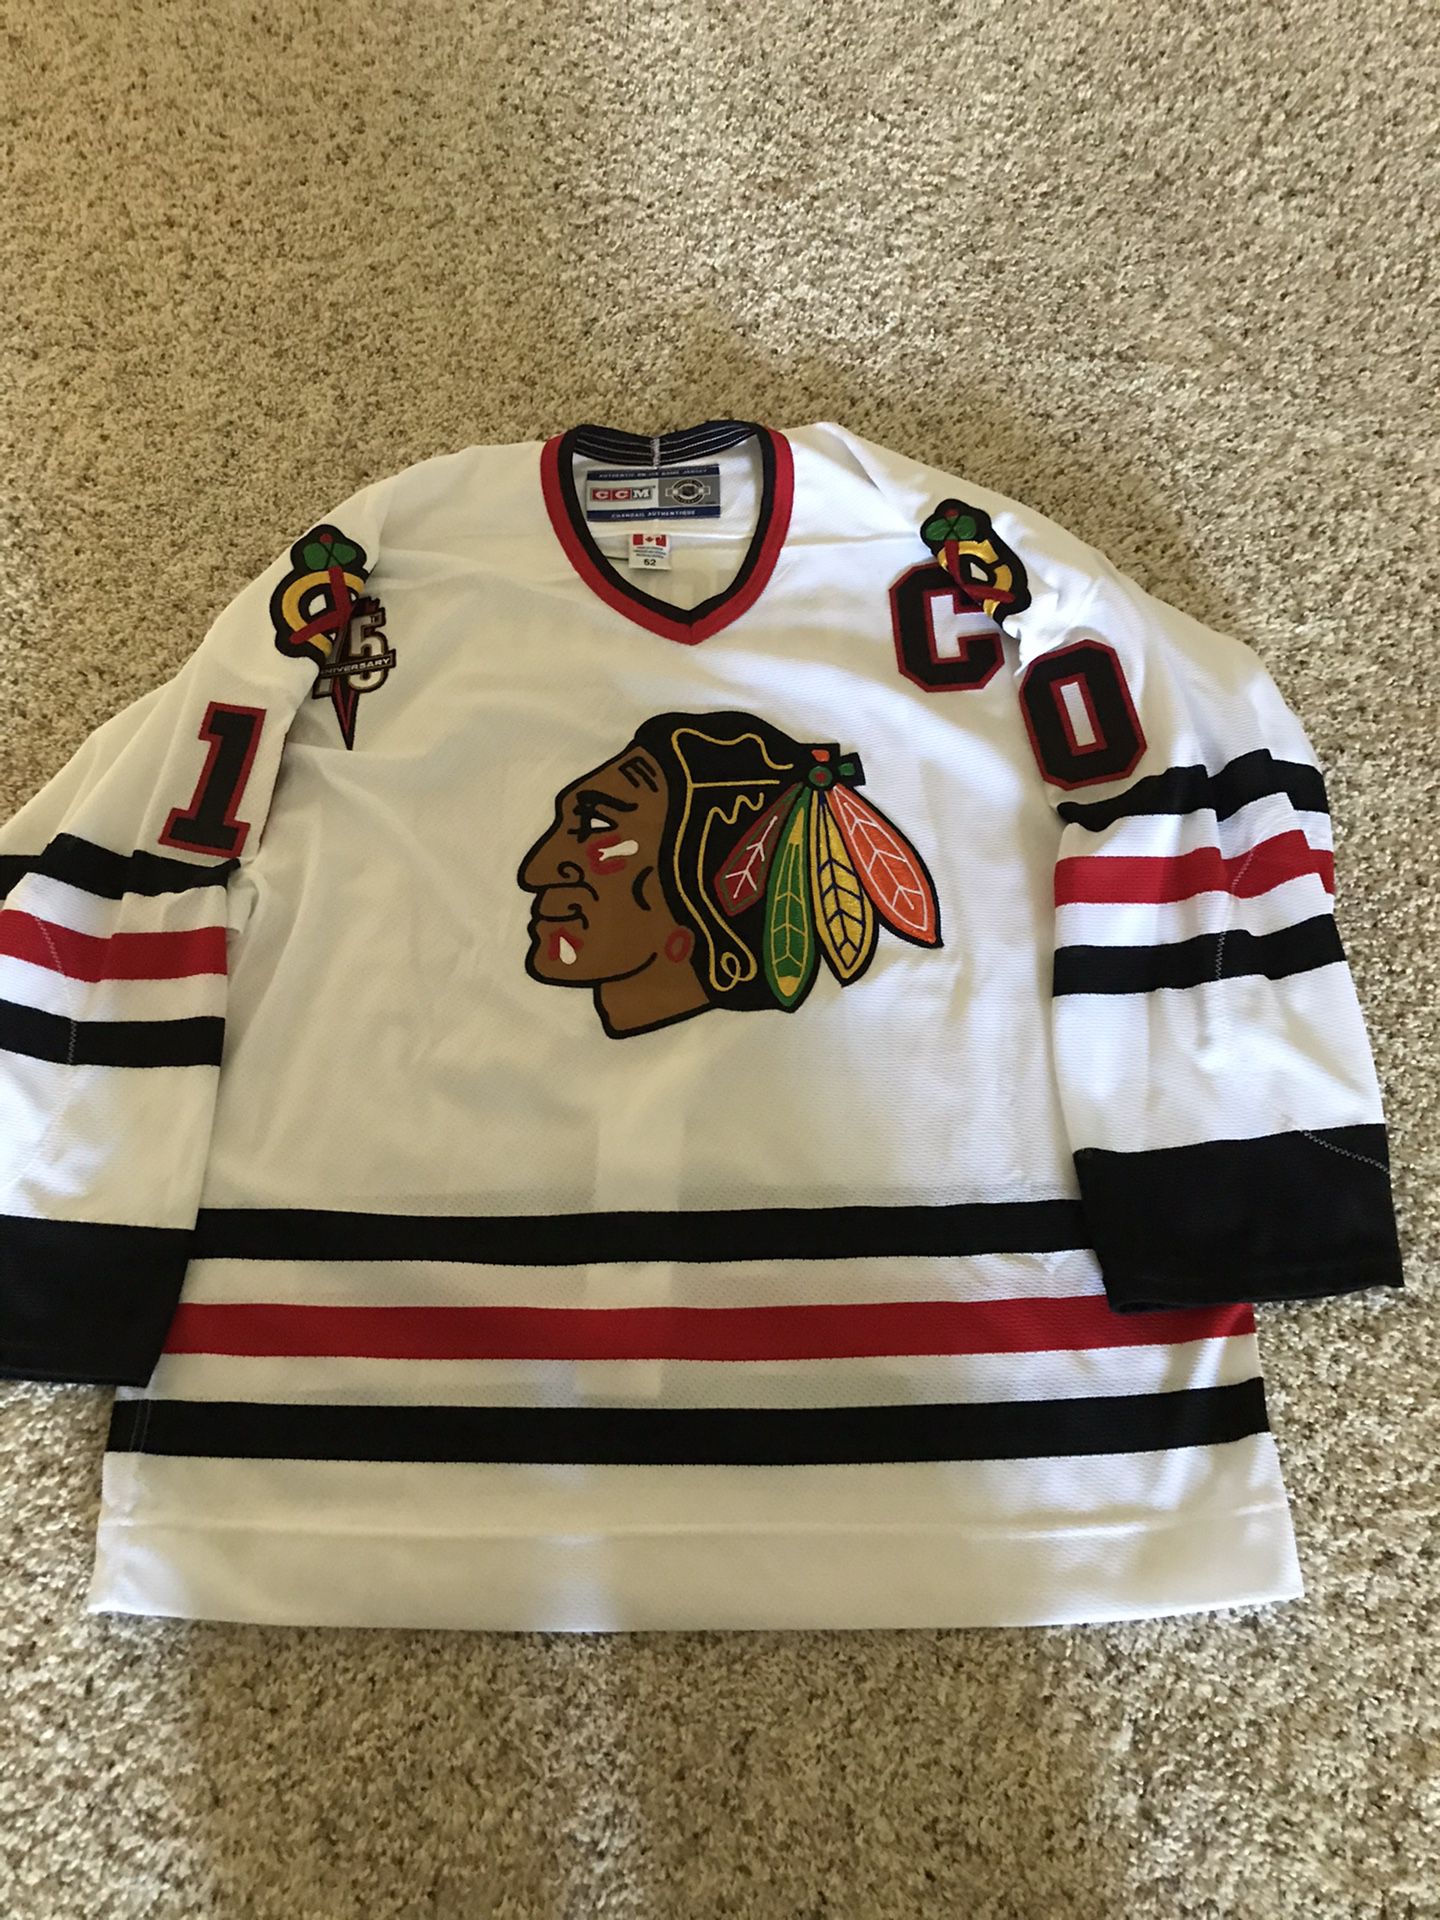 Chicago Blackhawks autographed jersey